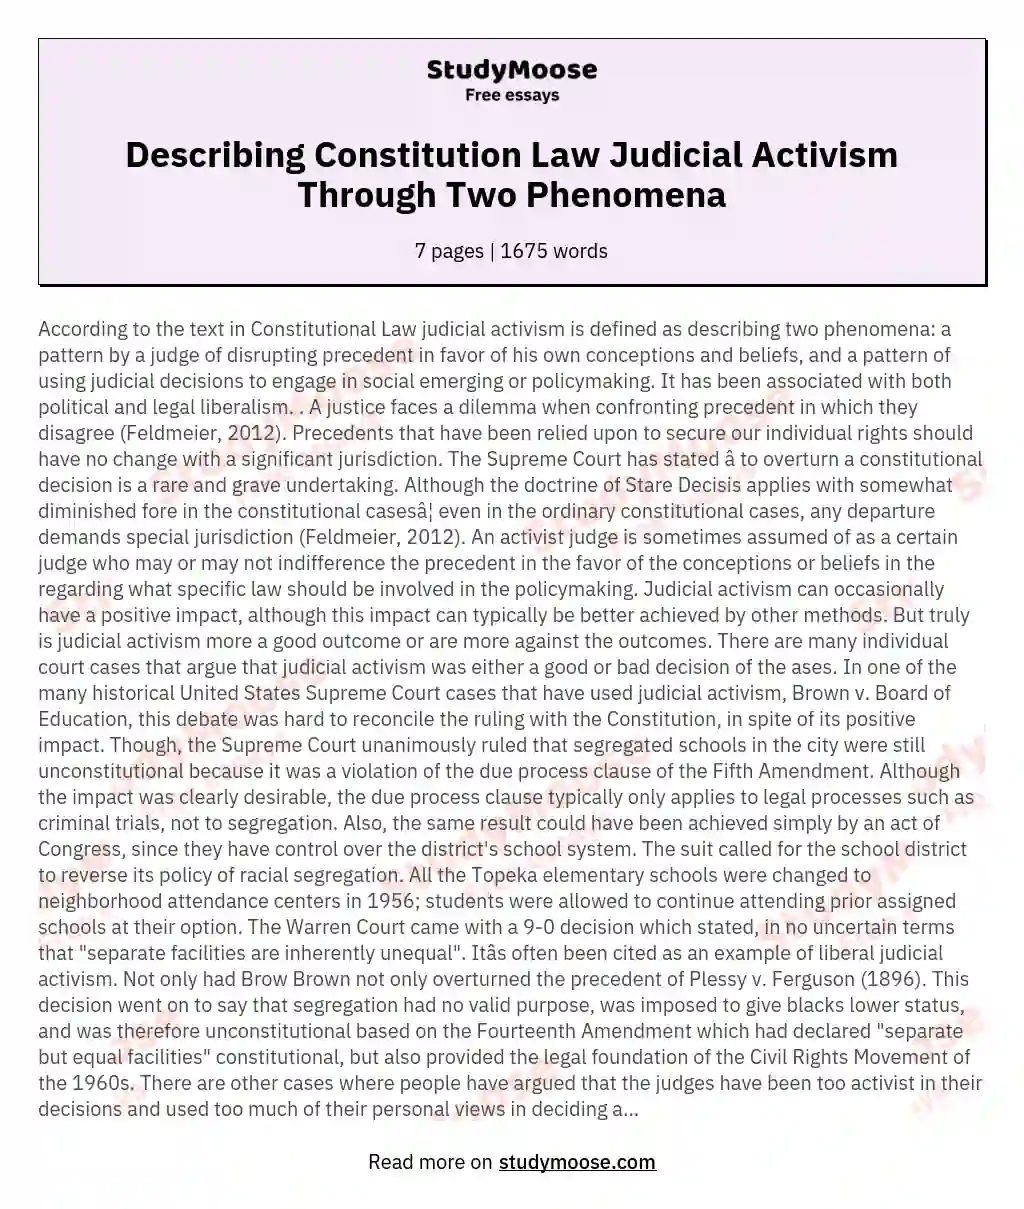 Describing Constitution Law Judicial Activism Through Two Phenomena essay